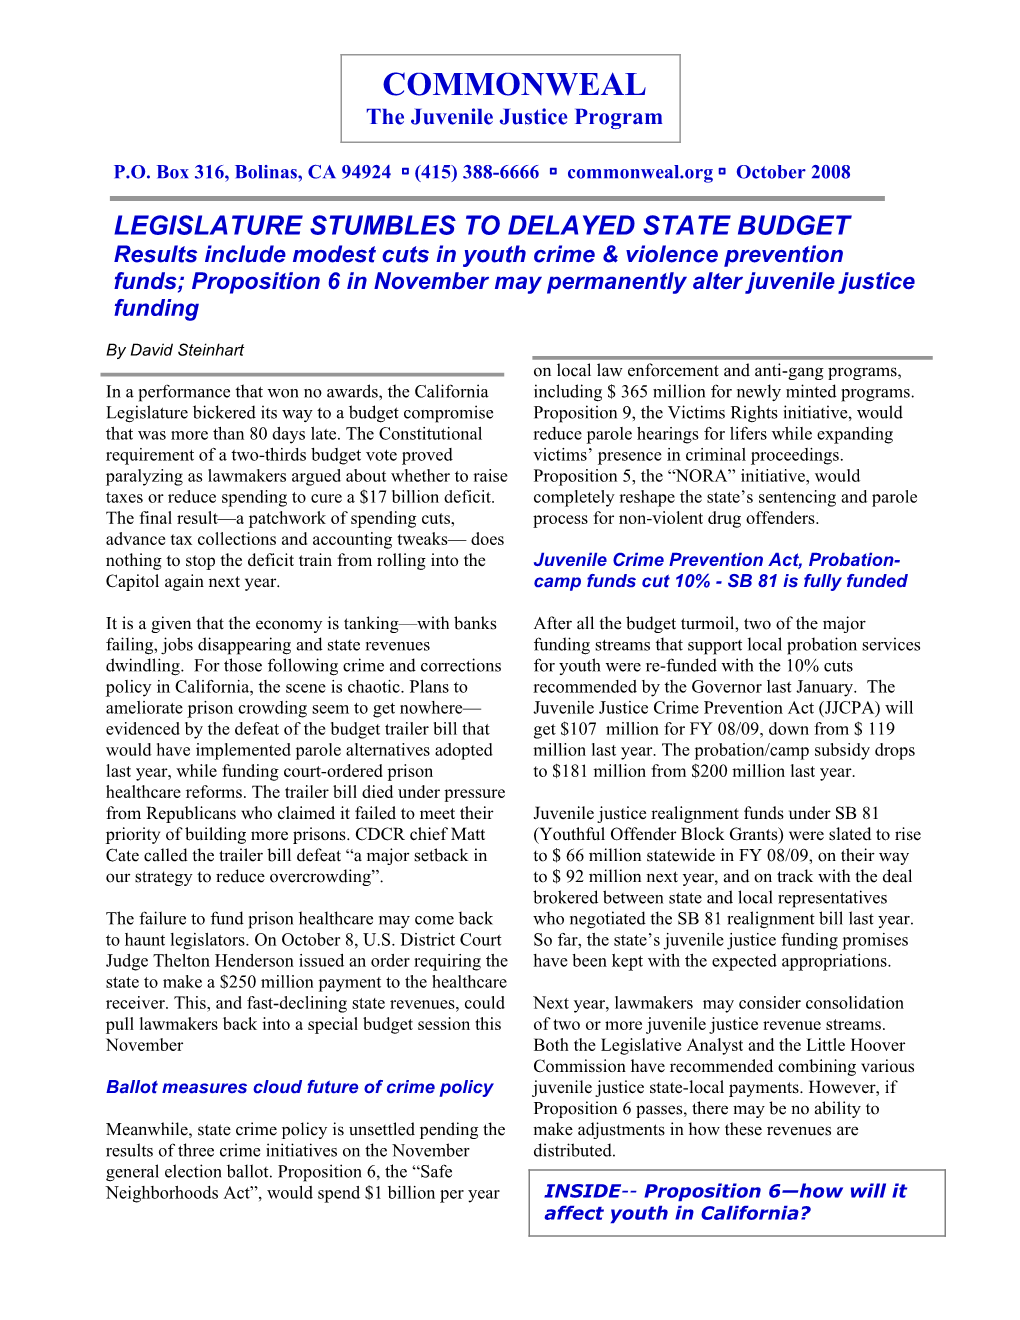 Legislature Stumbles to Delayed State Budget